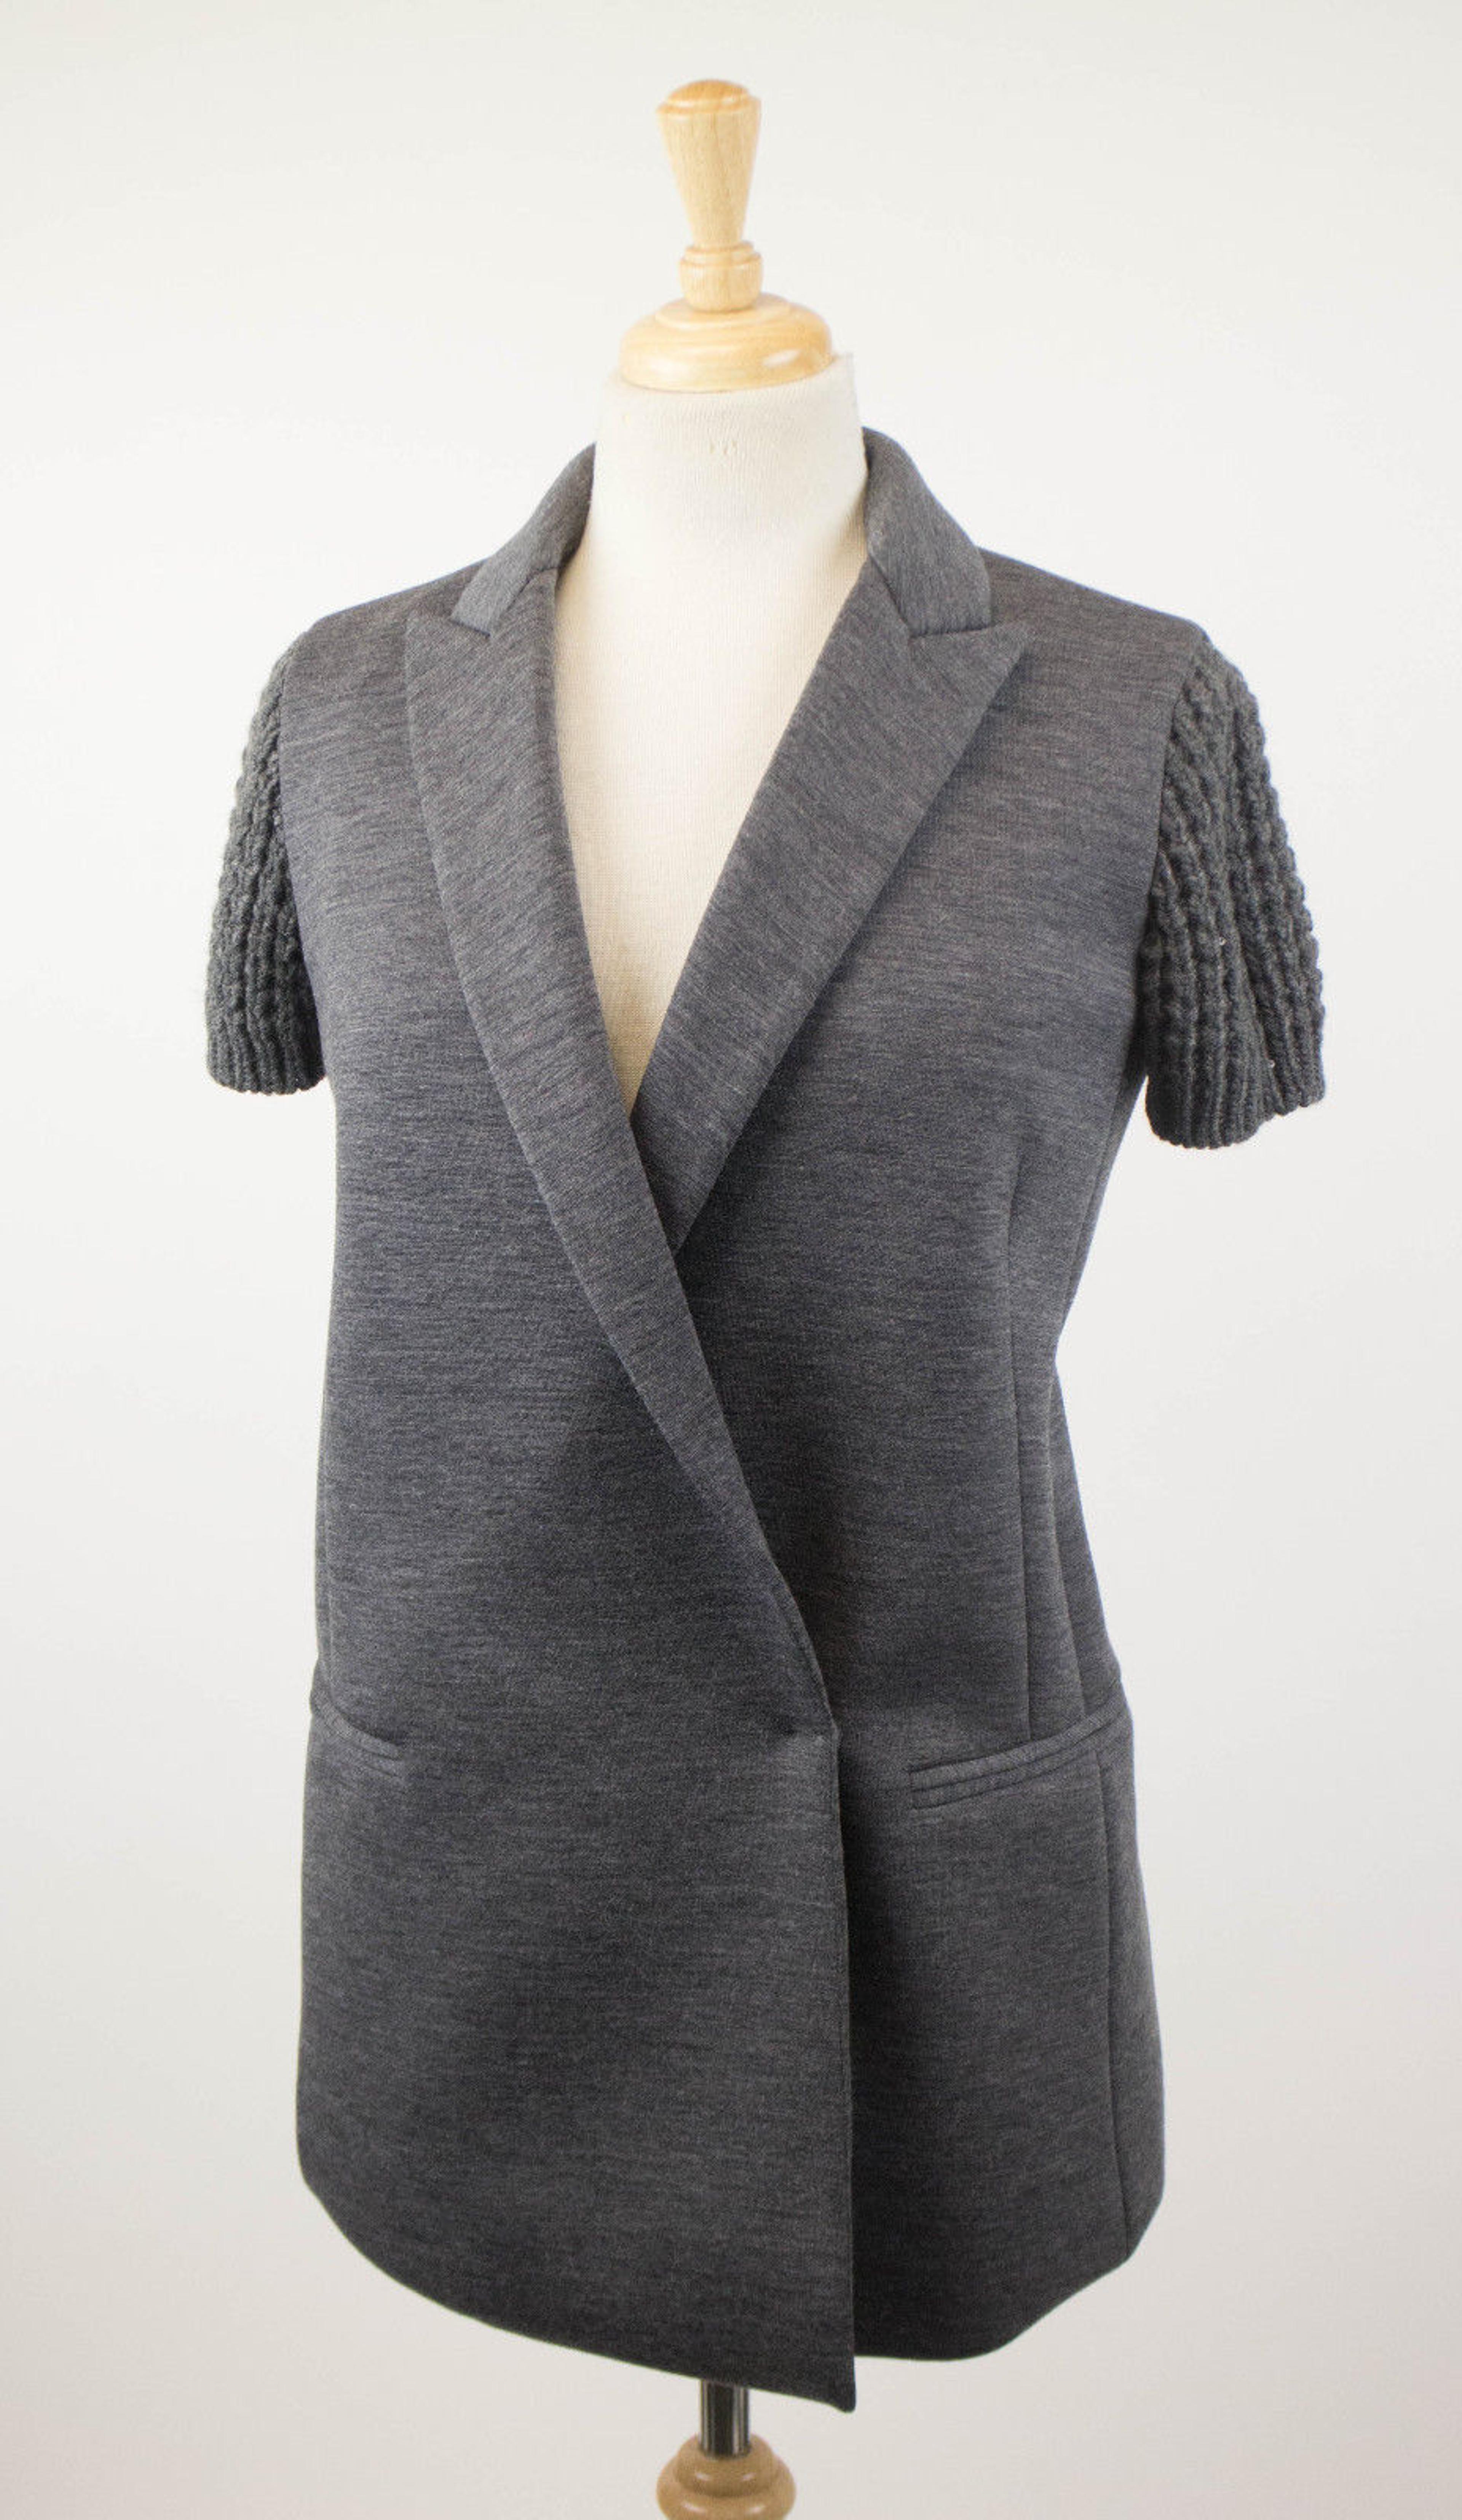 Alternate View 1 of Woman's Gray Wool Blend W/ Sequins Blazer